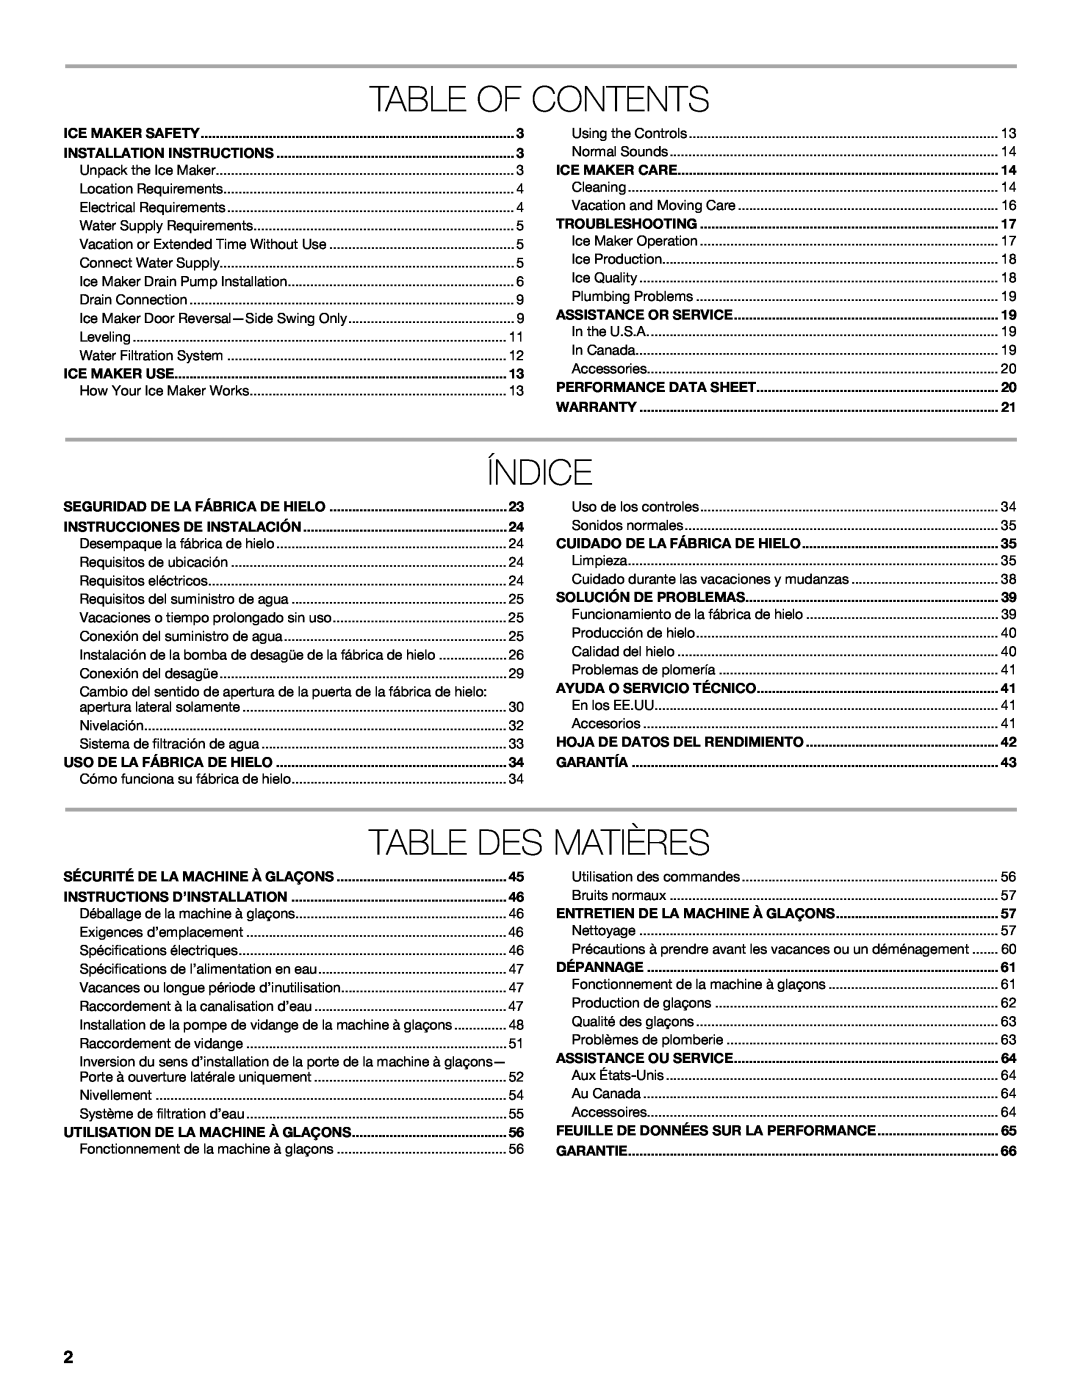 Jenn-Air W10519943B manual Table Of Contents, Índice, Table Des Matières 